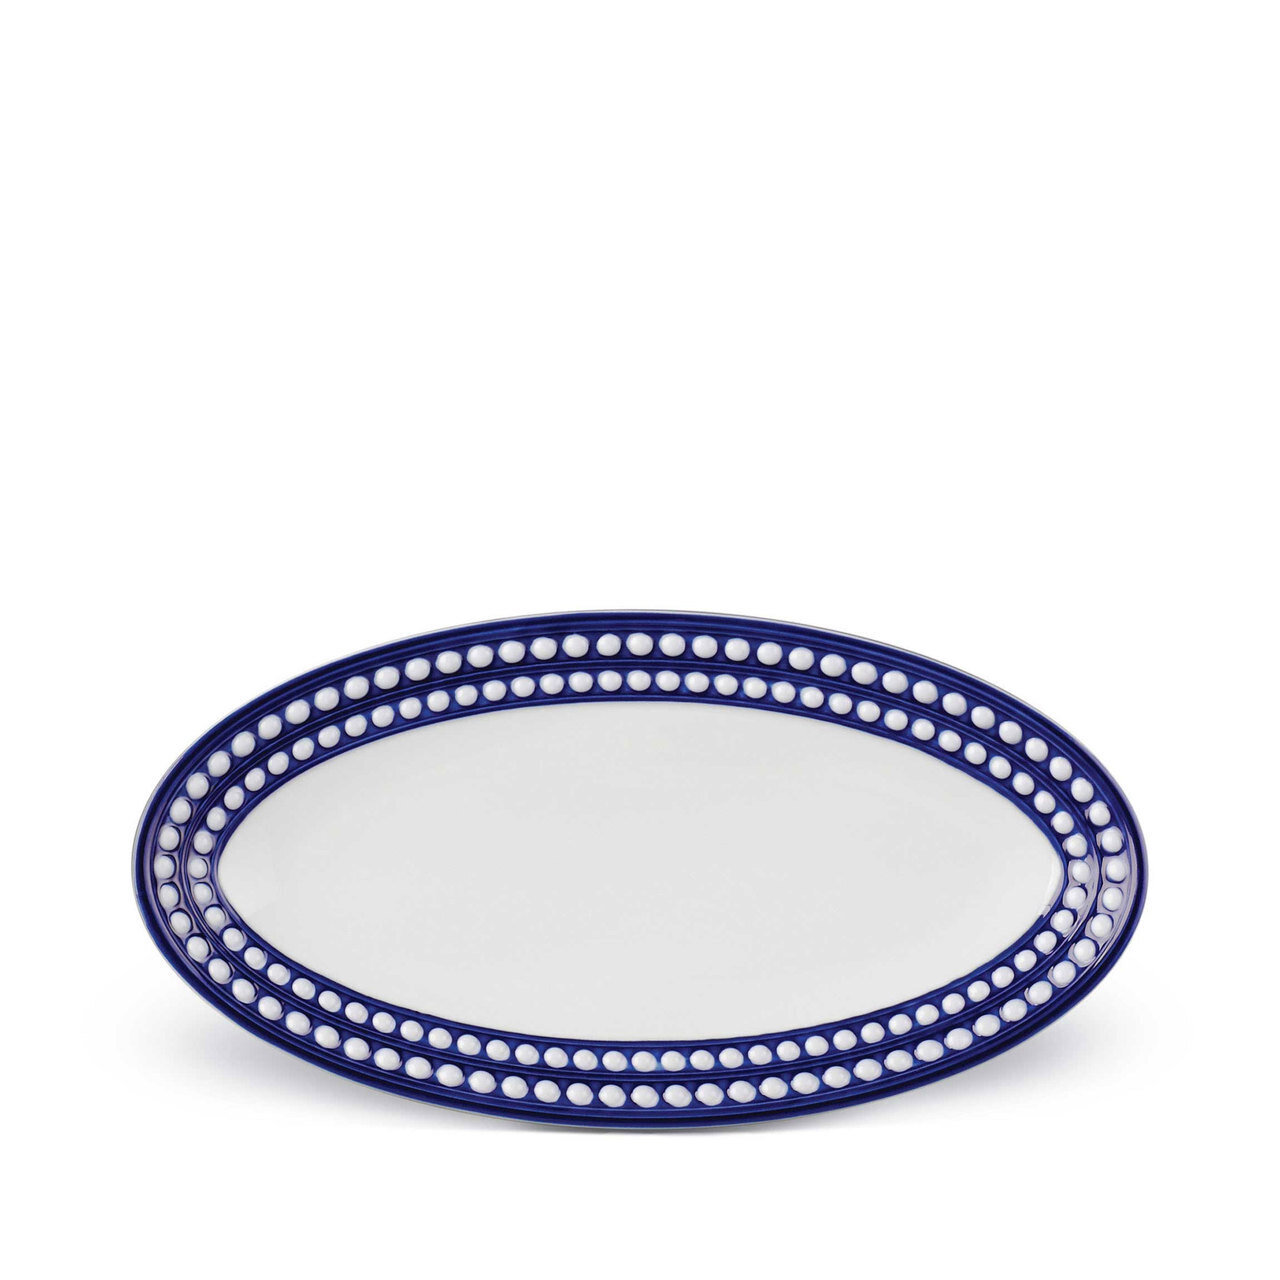 L'Objet Perlee Small Oval Platter Bleu